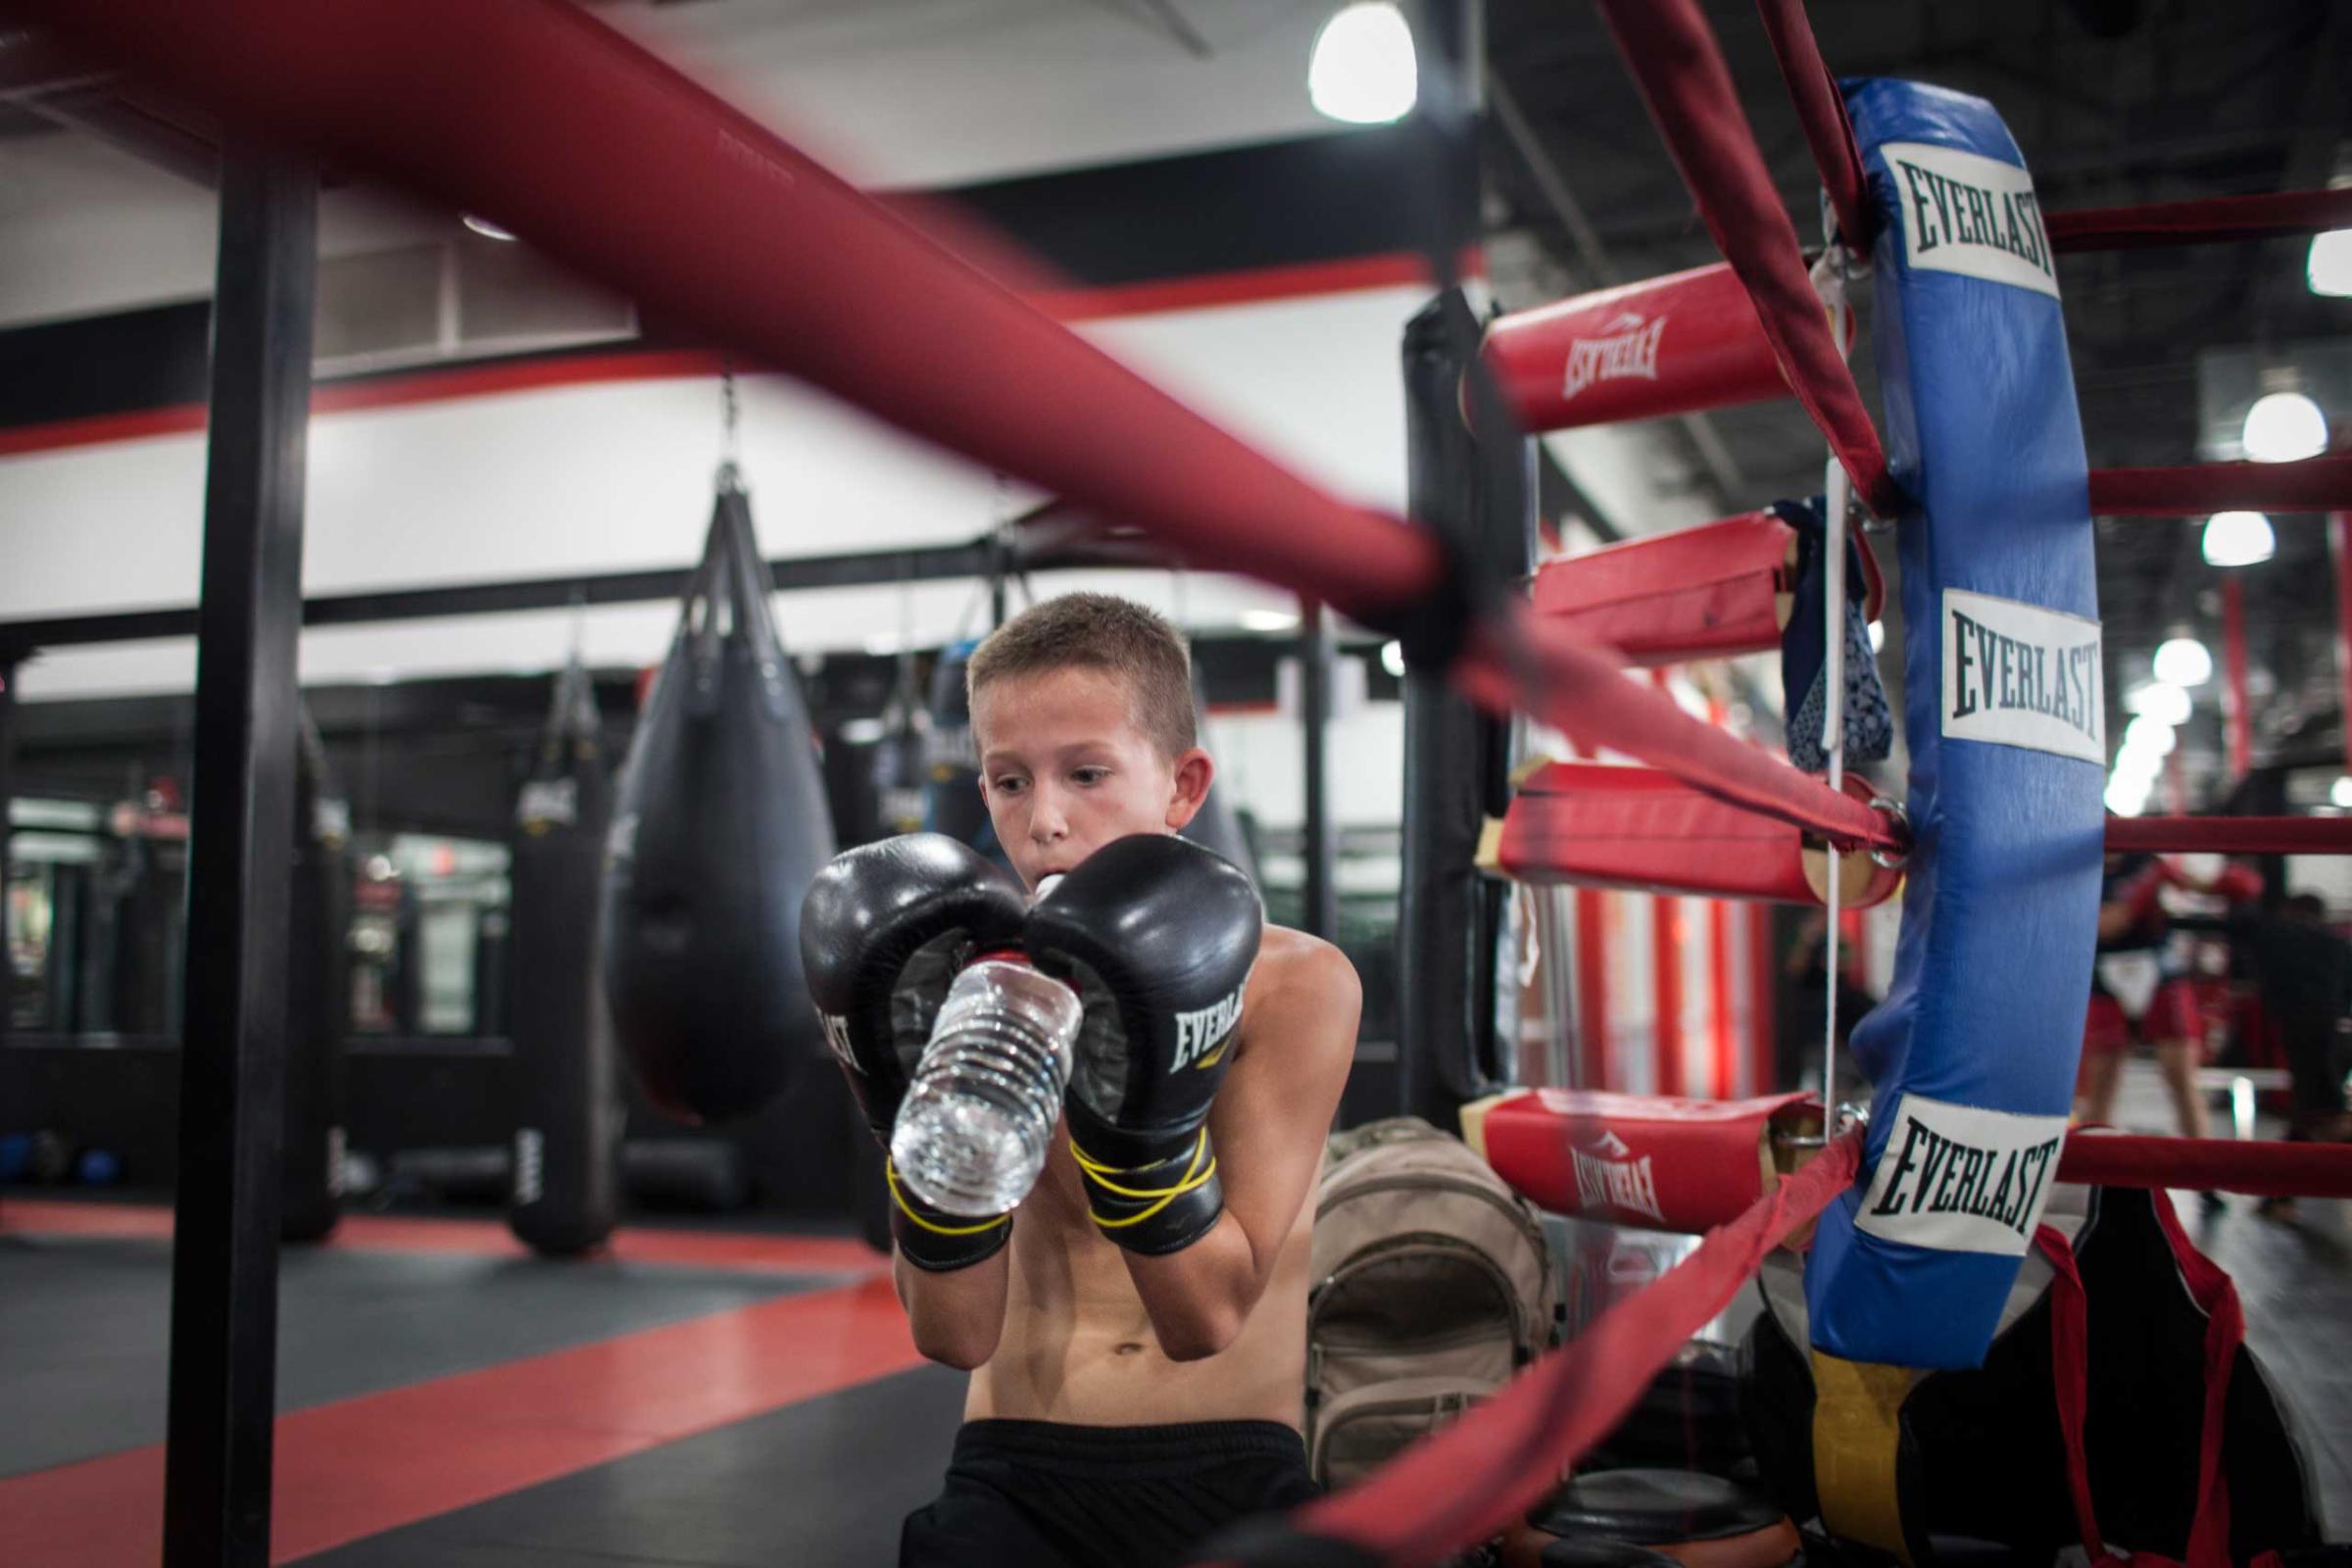 William Reid, 10, at a private boxing class in Power MMA gym, Mesa, Arizona, November 19th 2013. Photo: Miikka Pirinen